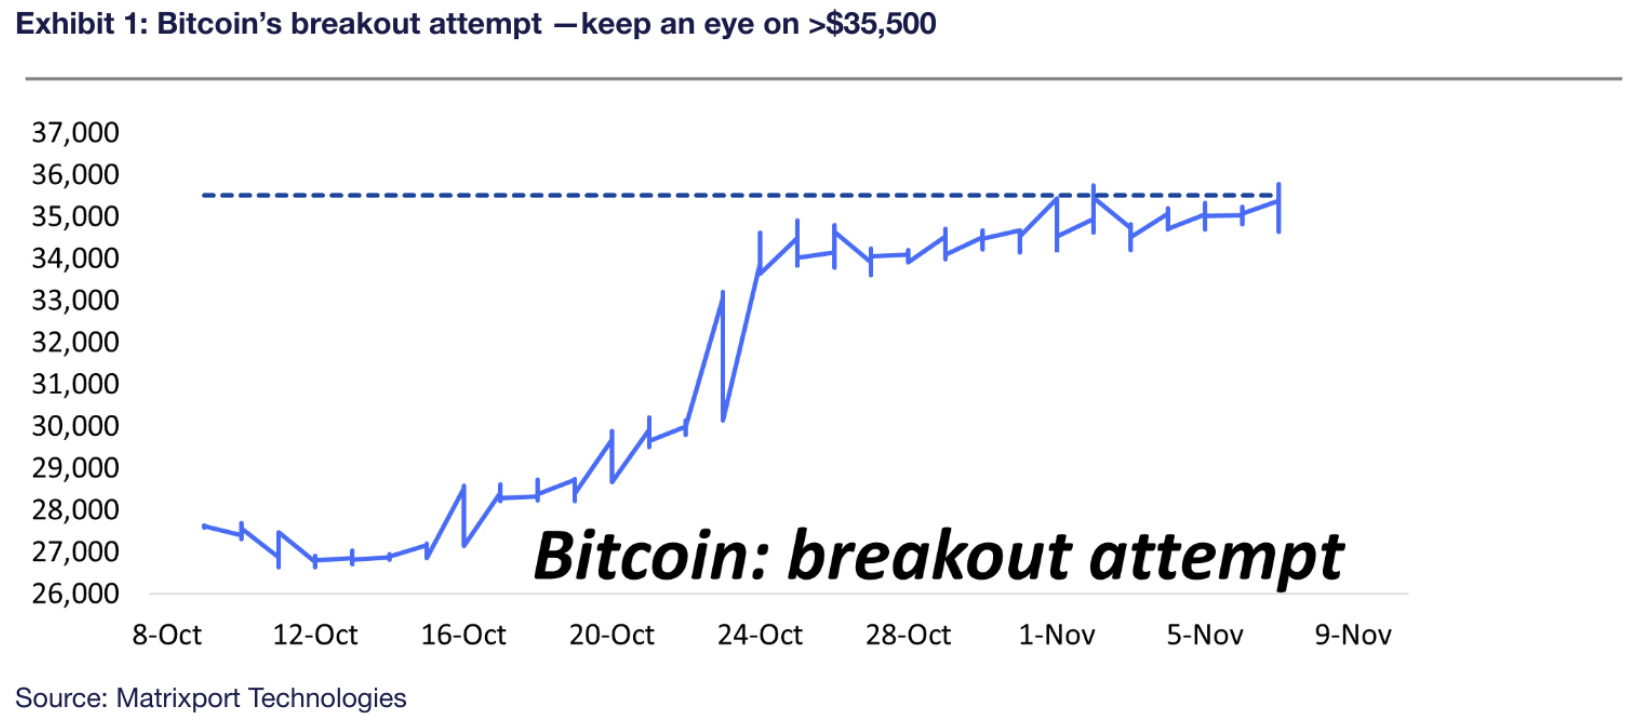 Exhibit 1: Bitcoin’s breakout attempt —keep an eye on >$35,500